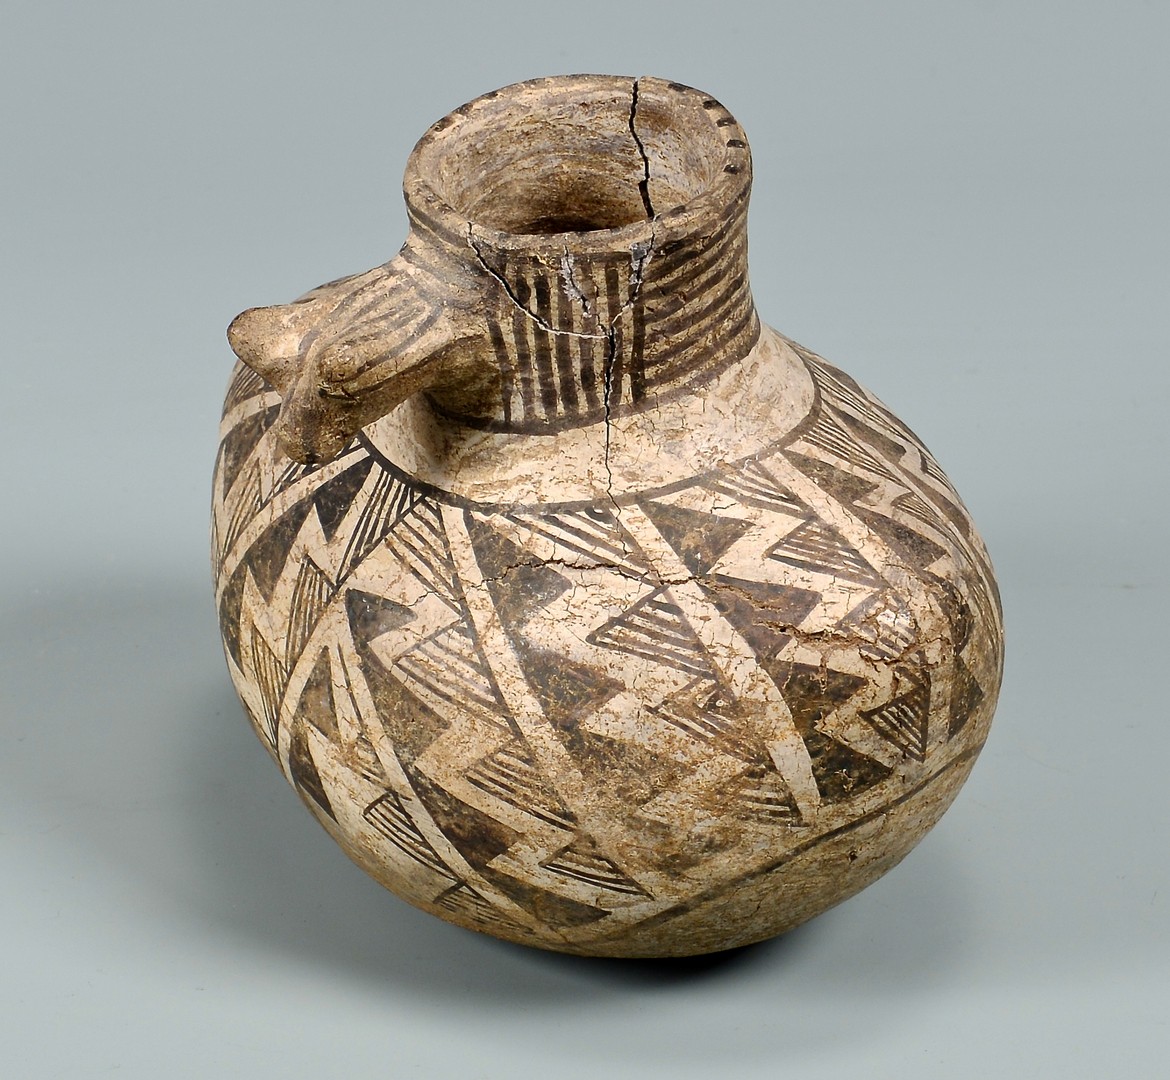 Lot 523: 6 Native American Pottery Items, incl. Anasazi